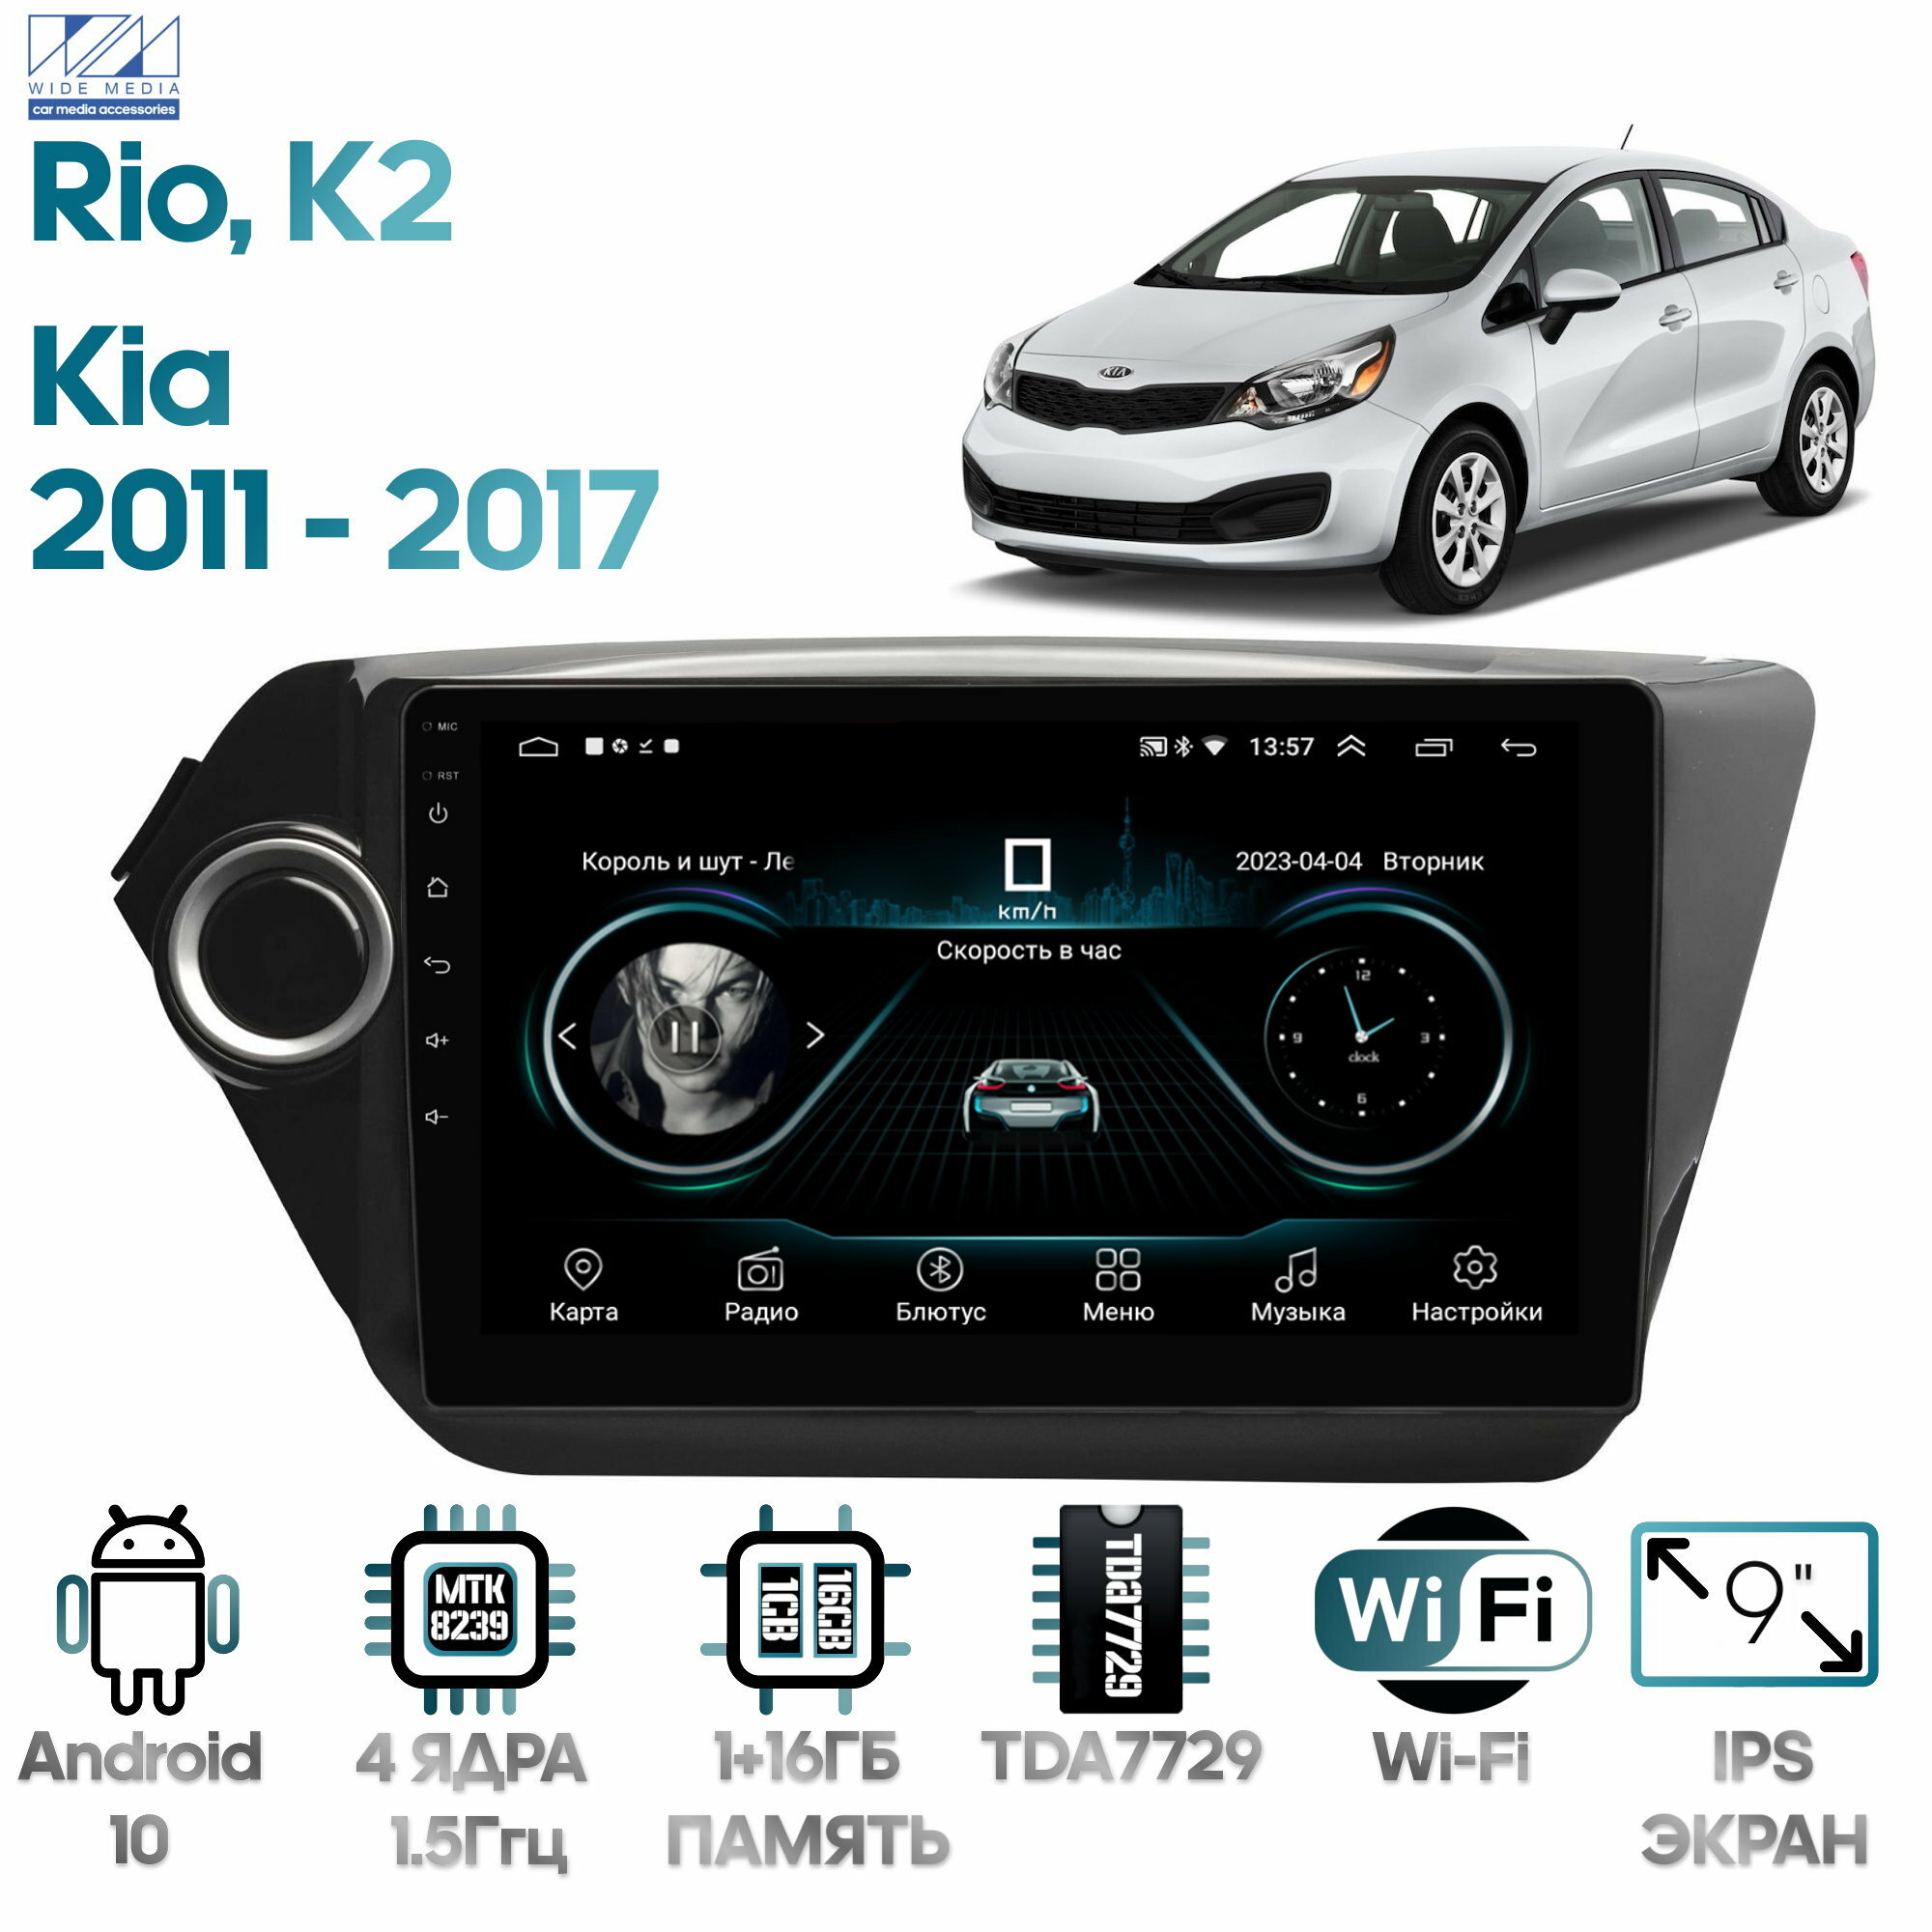 Штатная магнитола Wide Media Kia Rio, K2 2011 - 2017 [Android 10, WiFi, 1/16GB, 4 ядра]